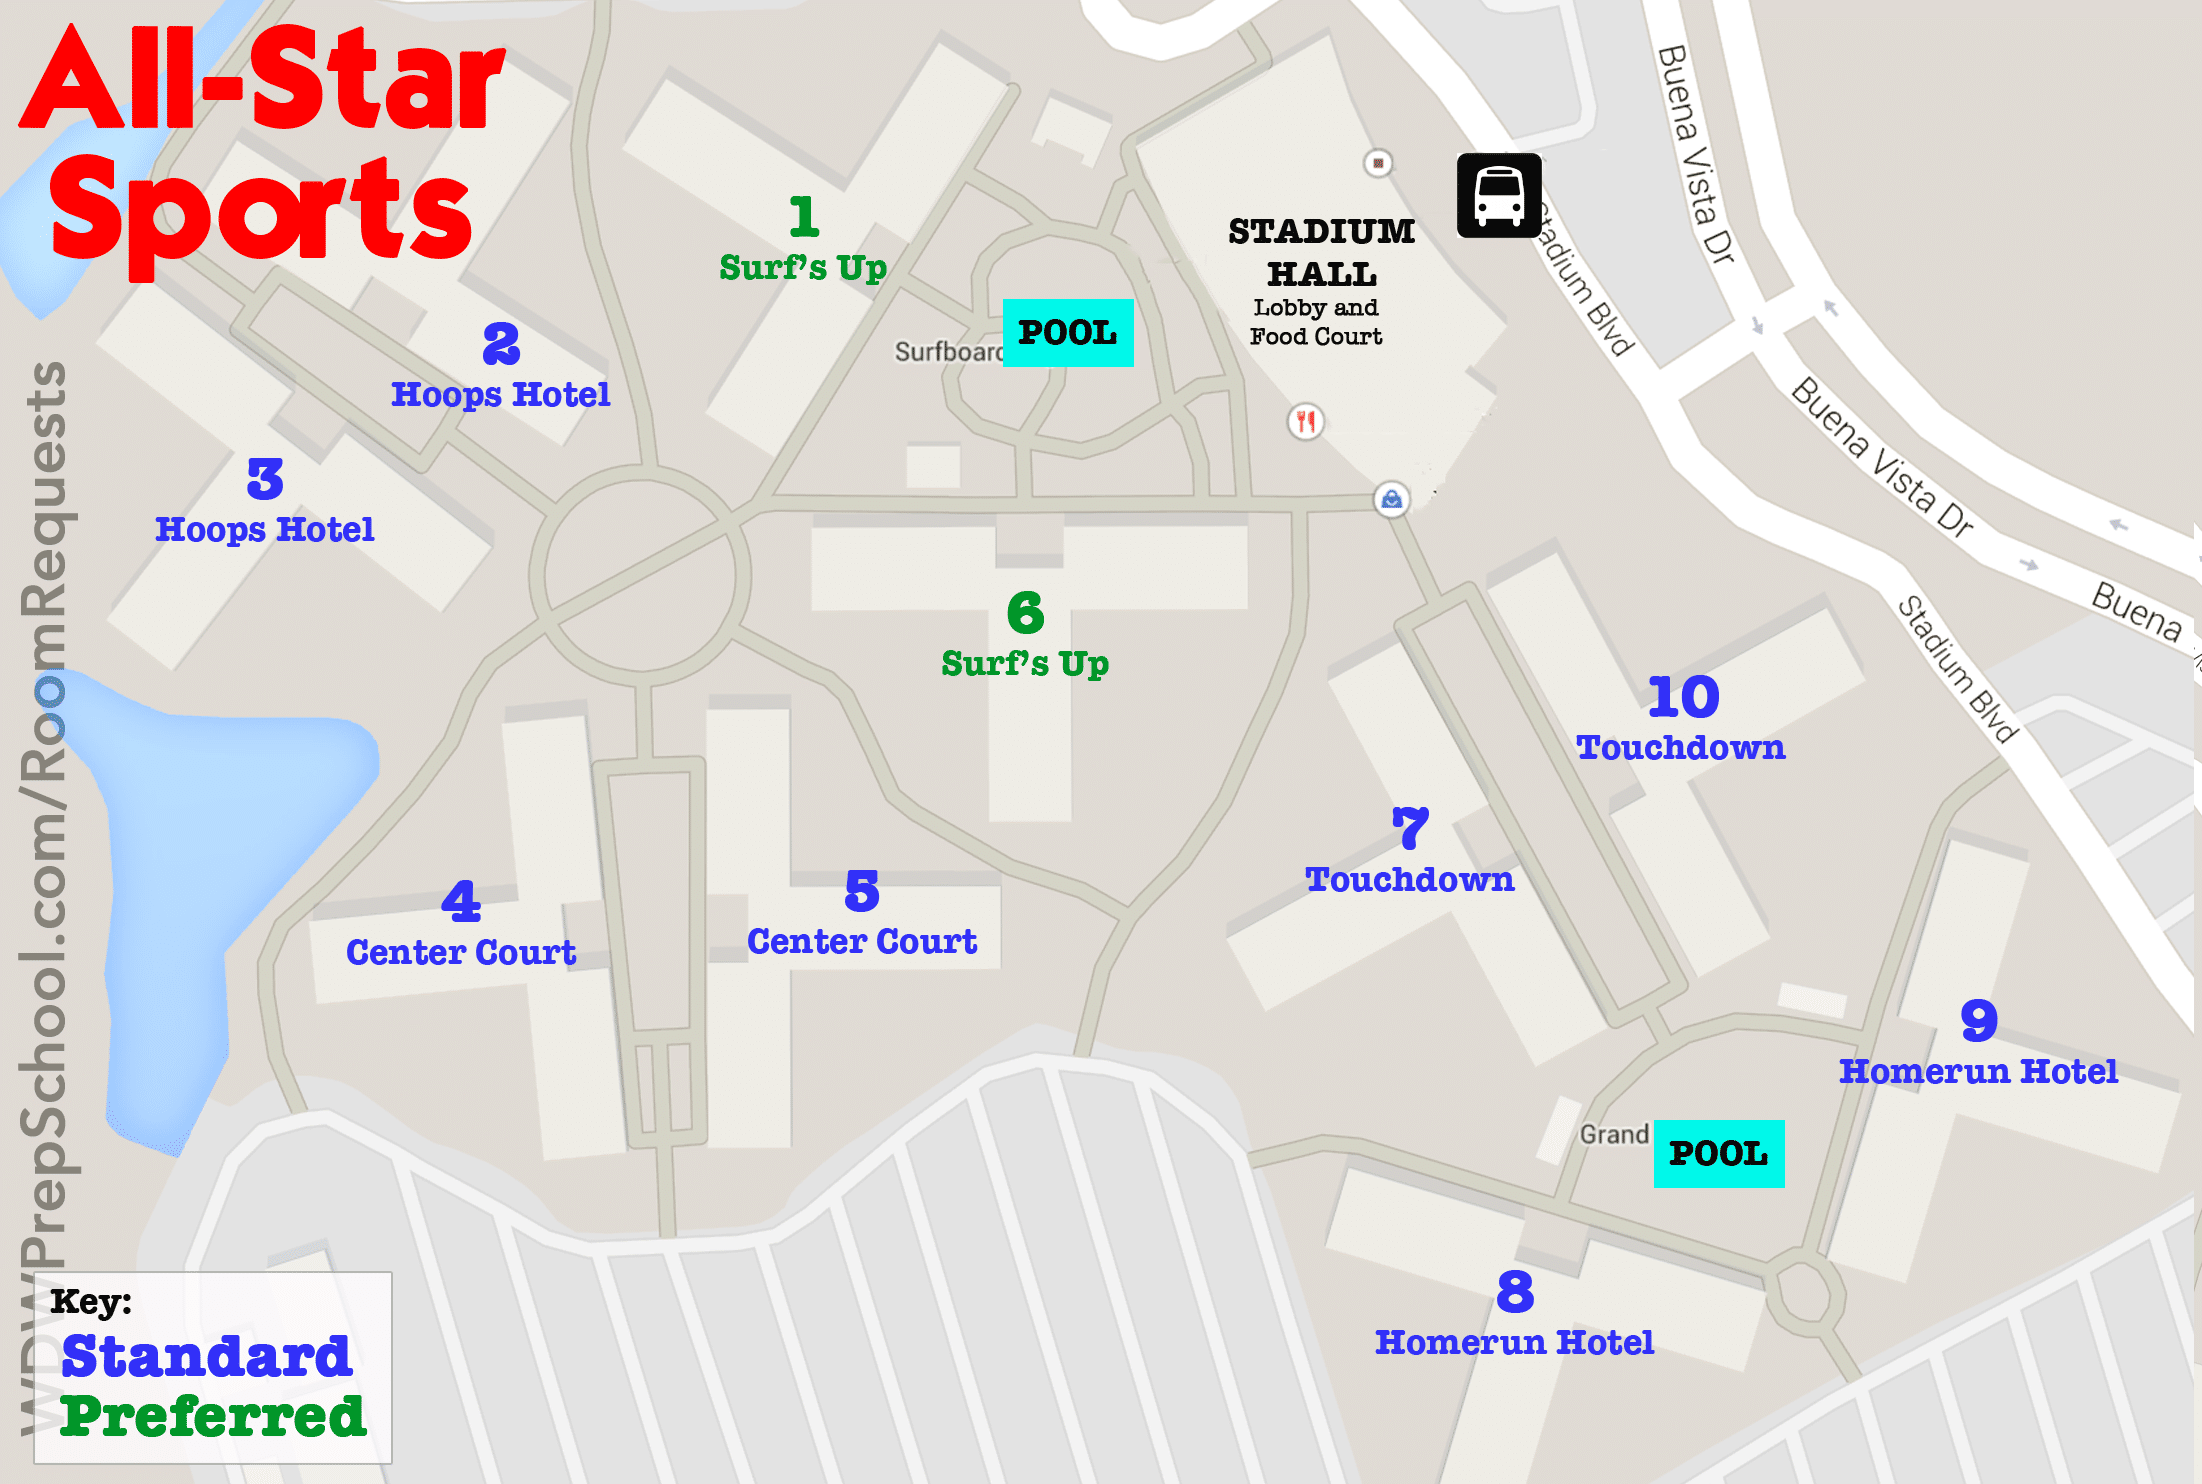 All-Star Sports Resort Maps